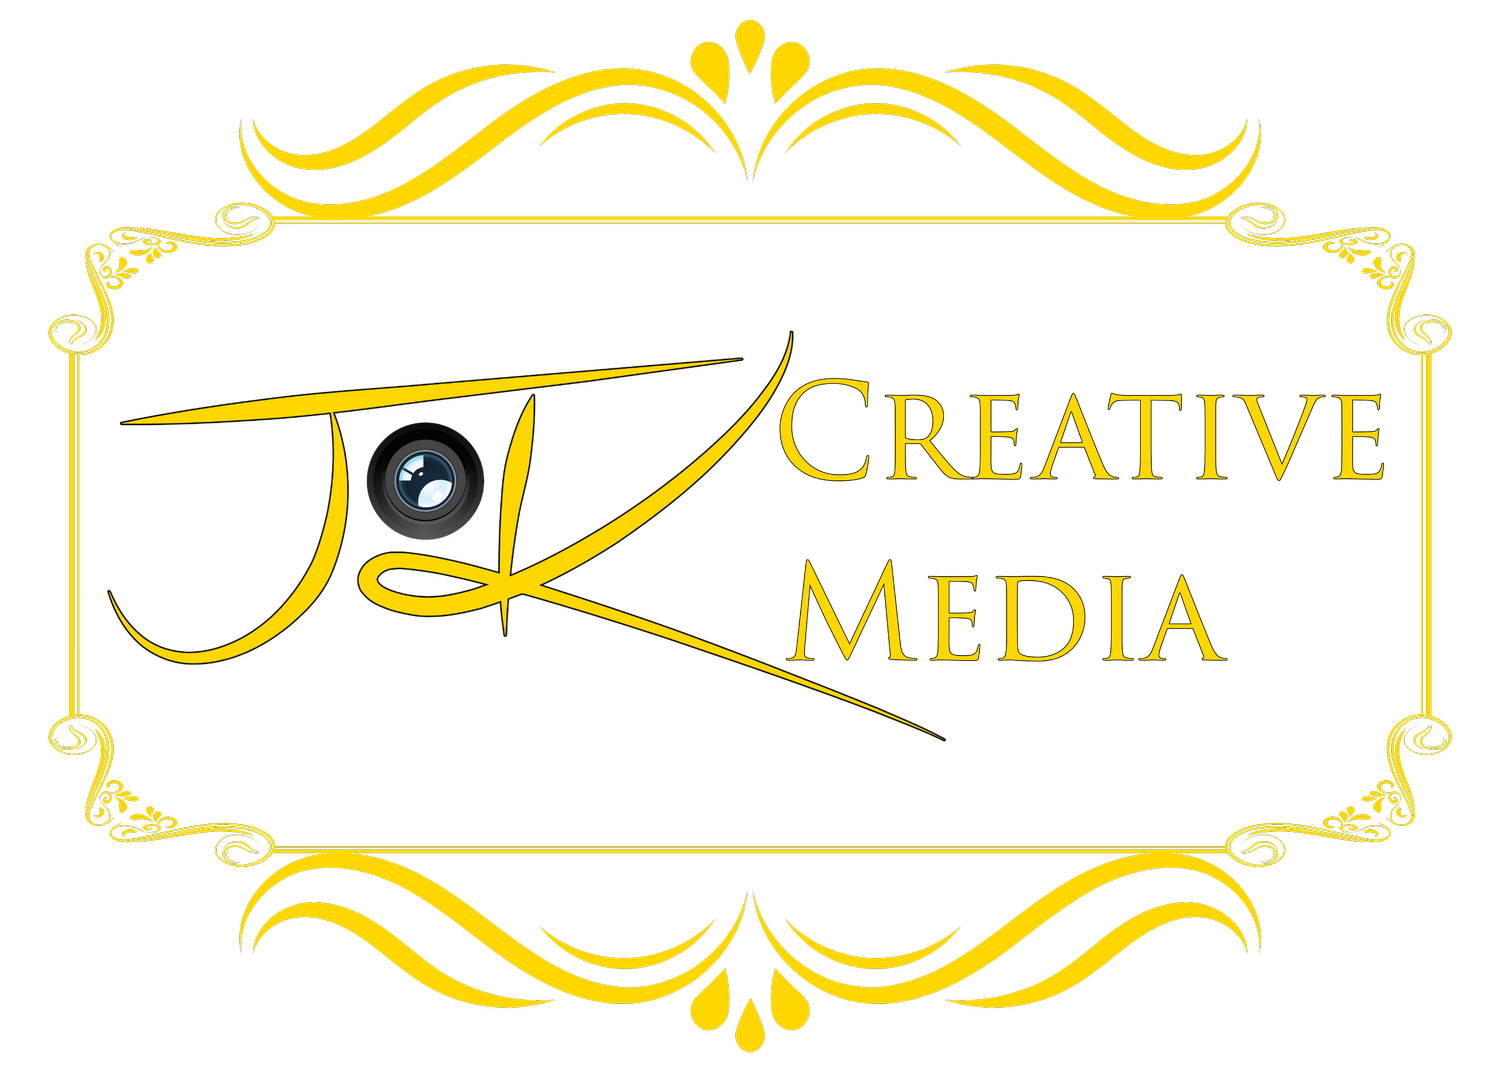 JK Creative Media